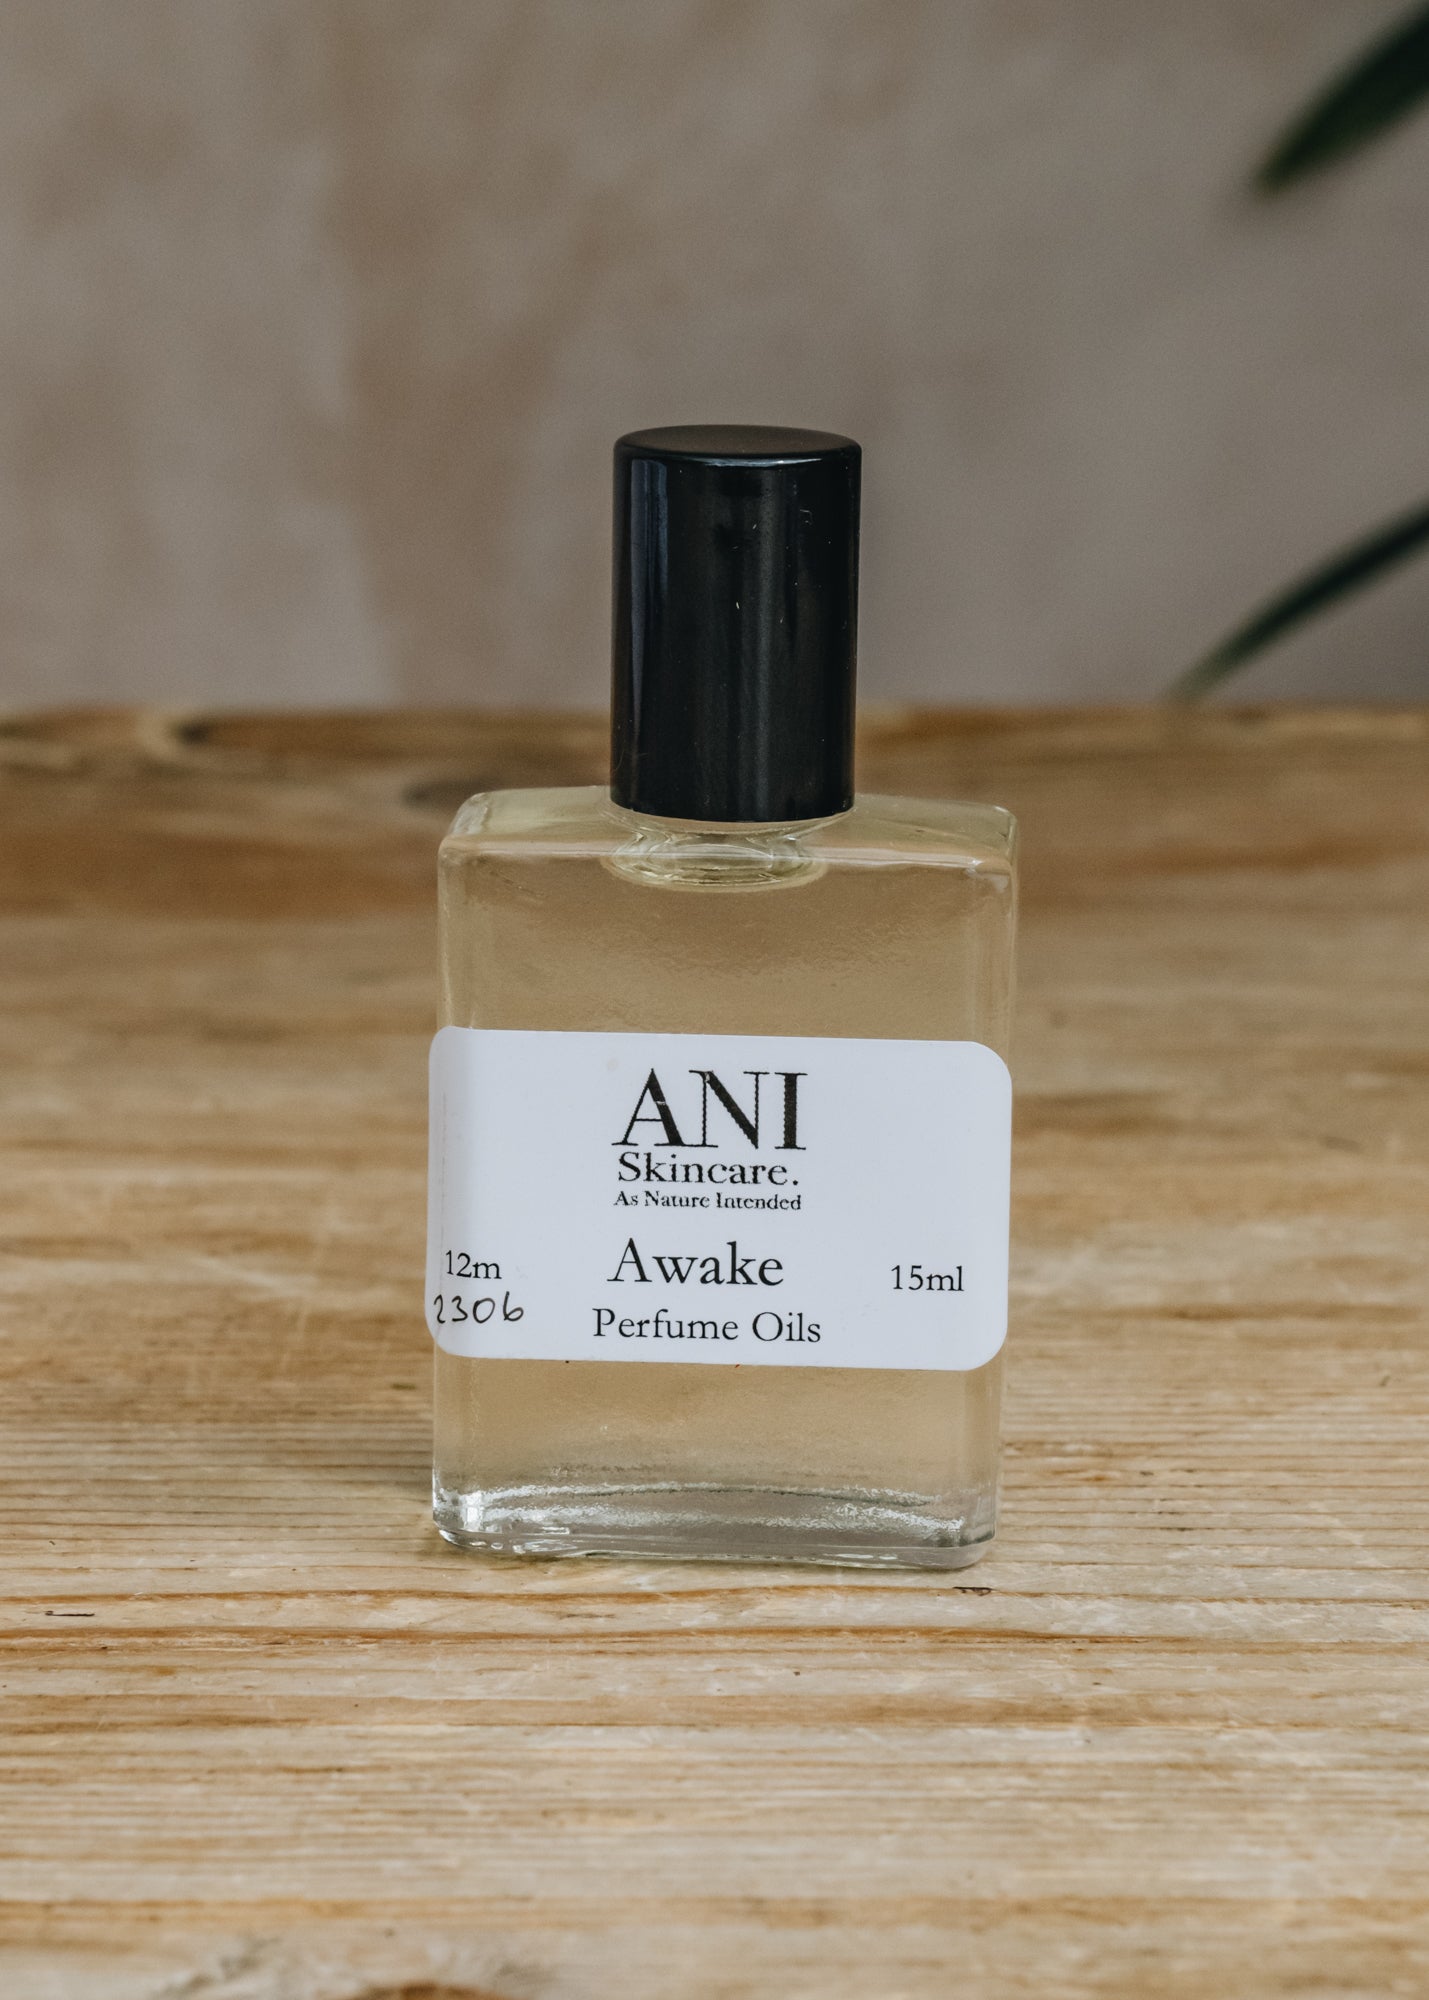 ANI Awake Perfume Oil